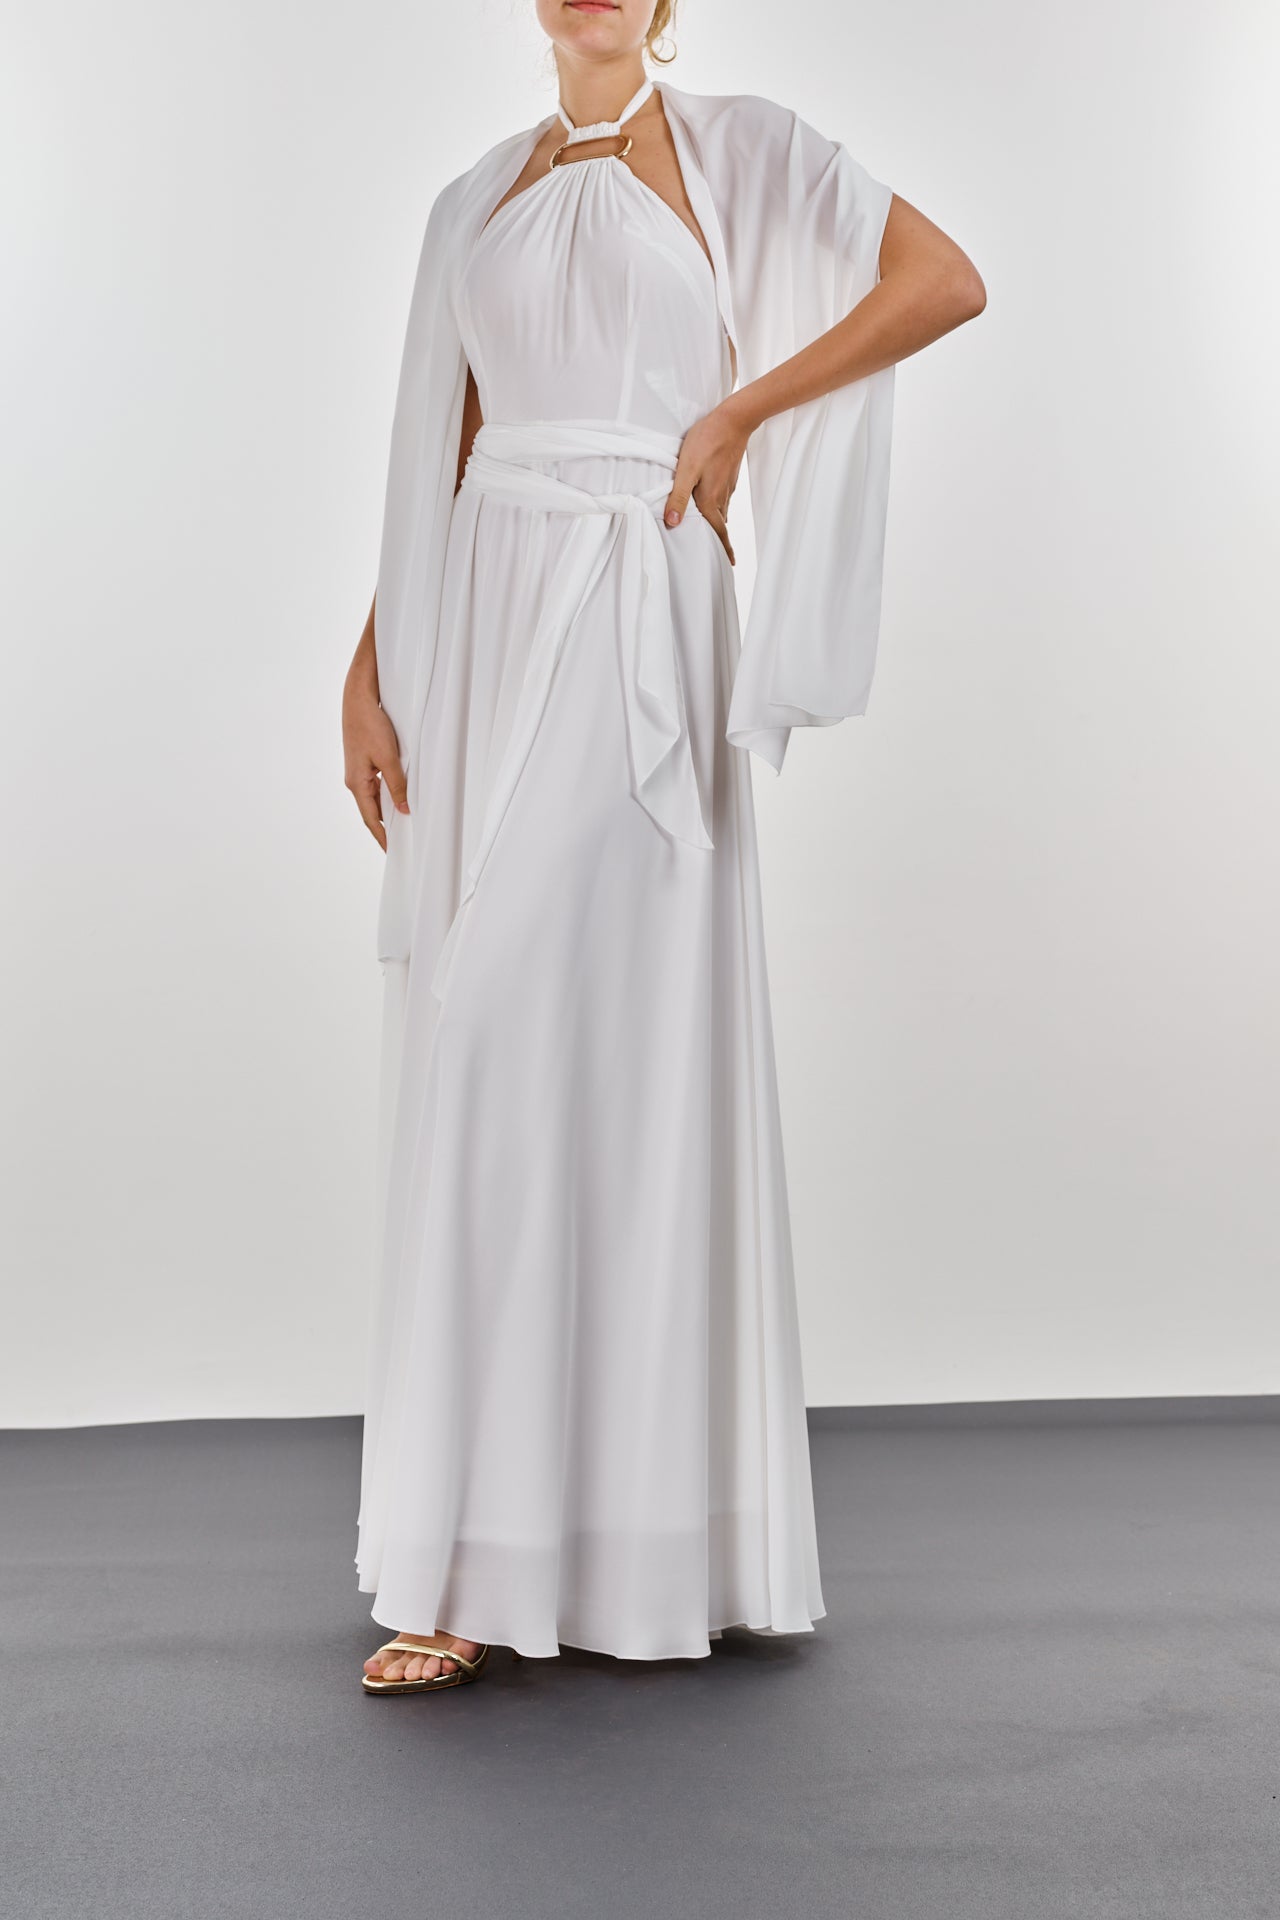 Aphrodite Halter Dress